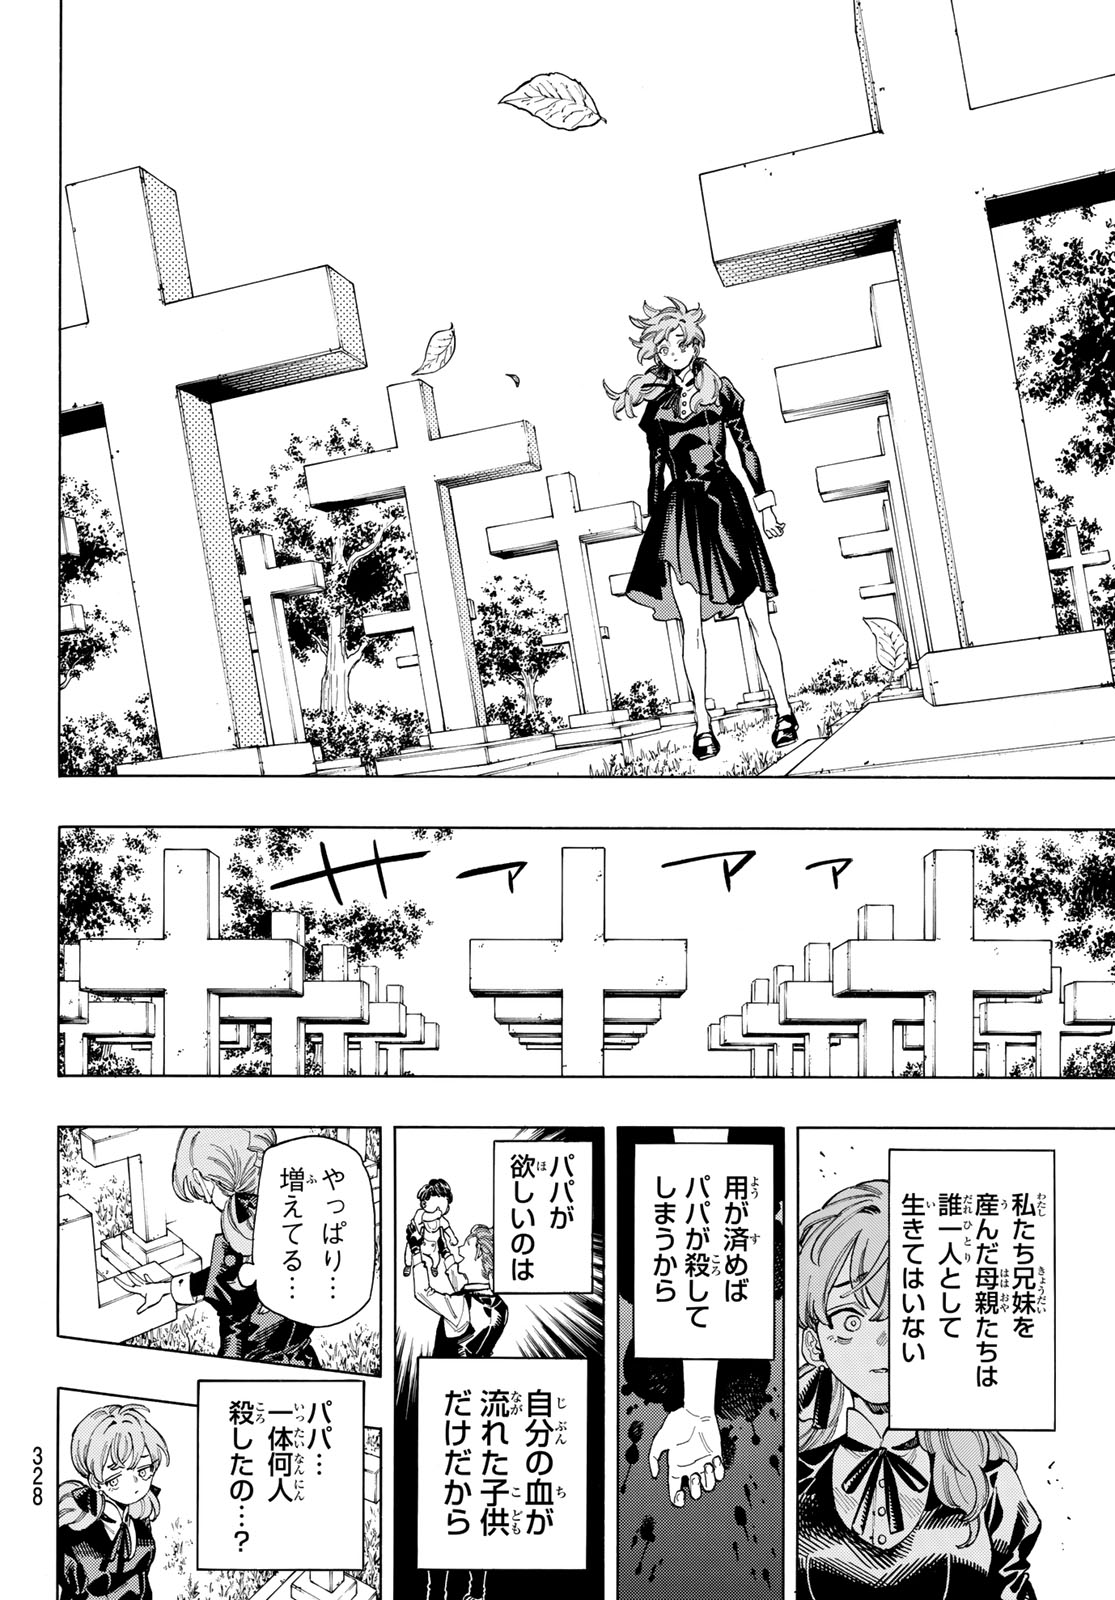 Akabane Honeko no Bodyguard - Chapter 71 - Page 2